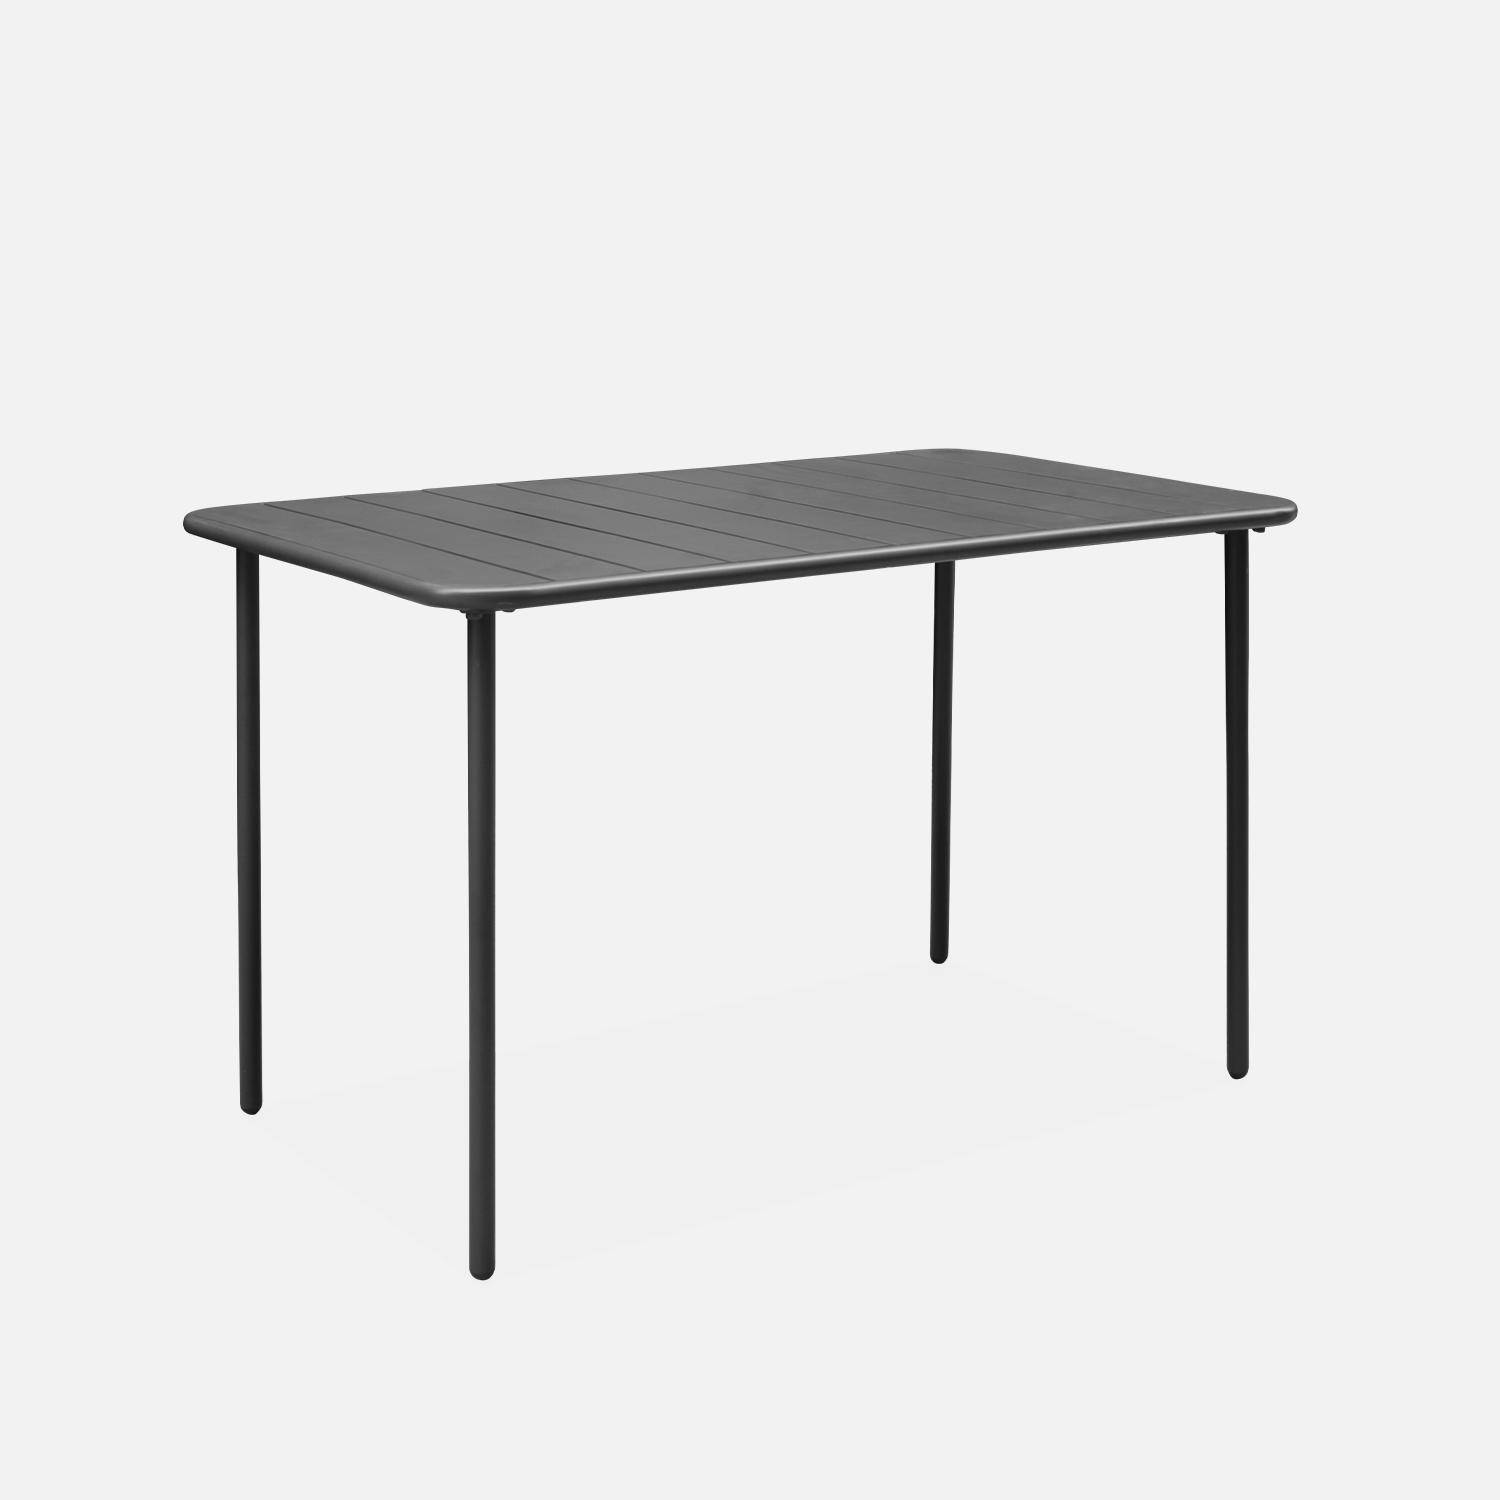 4-seater rectangular steel garden table, 120cm, anthracite Photo5